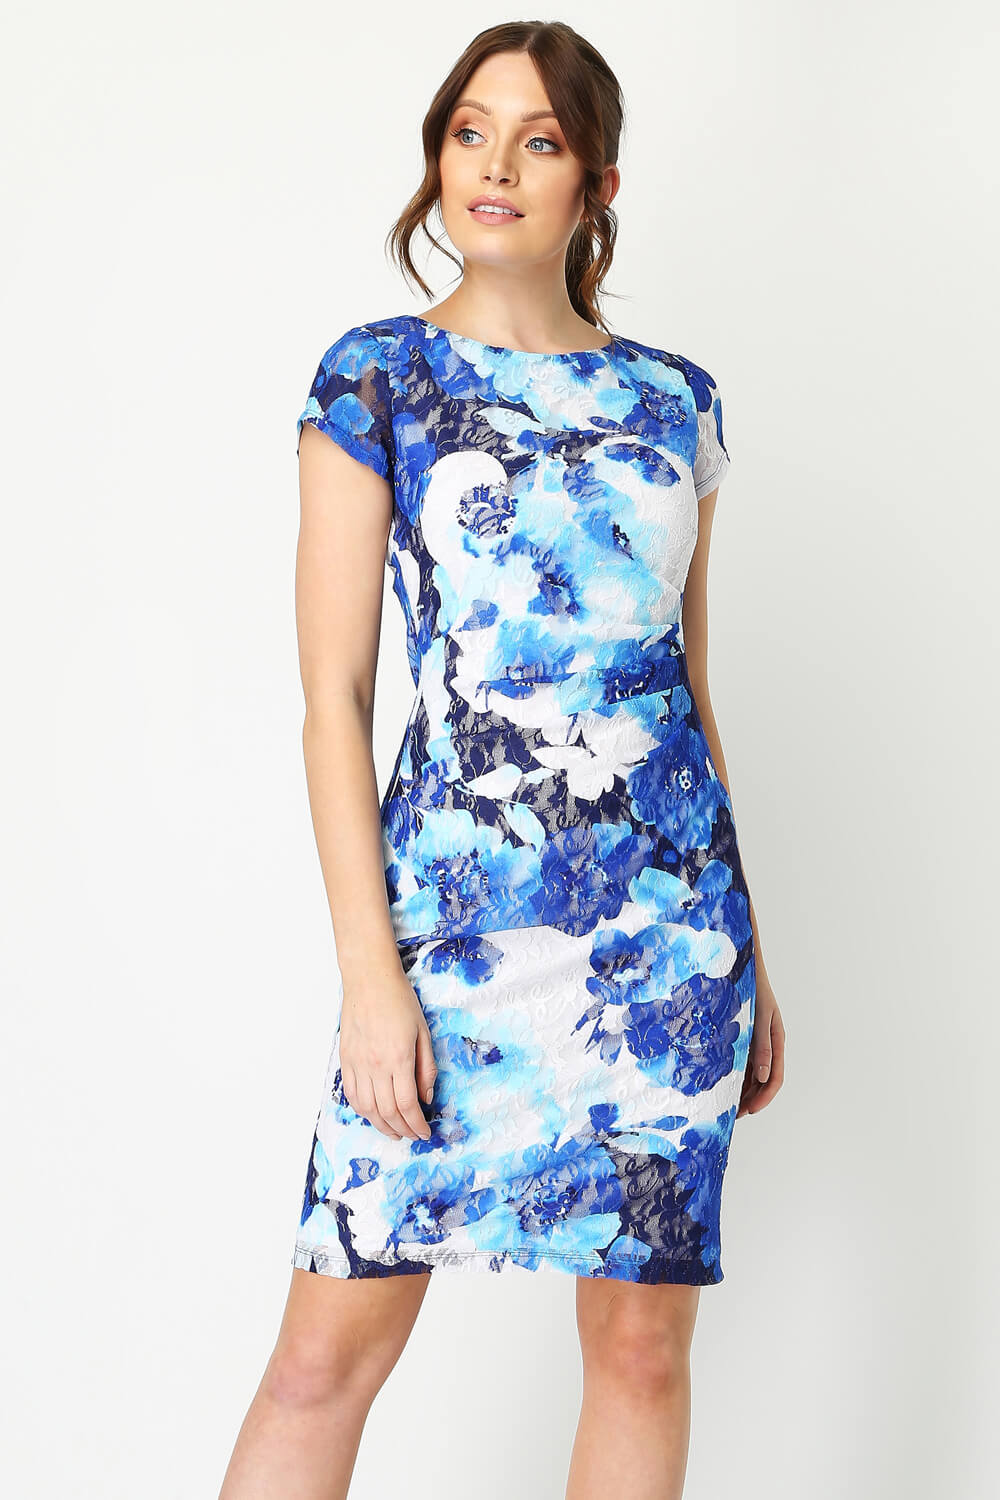 Floral Print Lace Ruched Dress in Royal Blue - Roman Originals UK